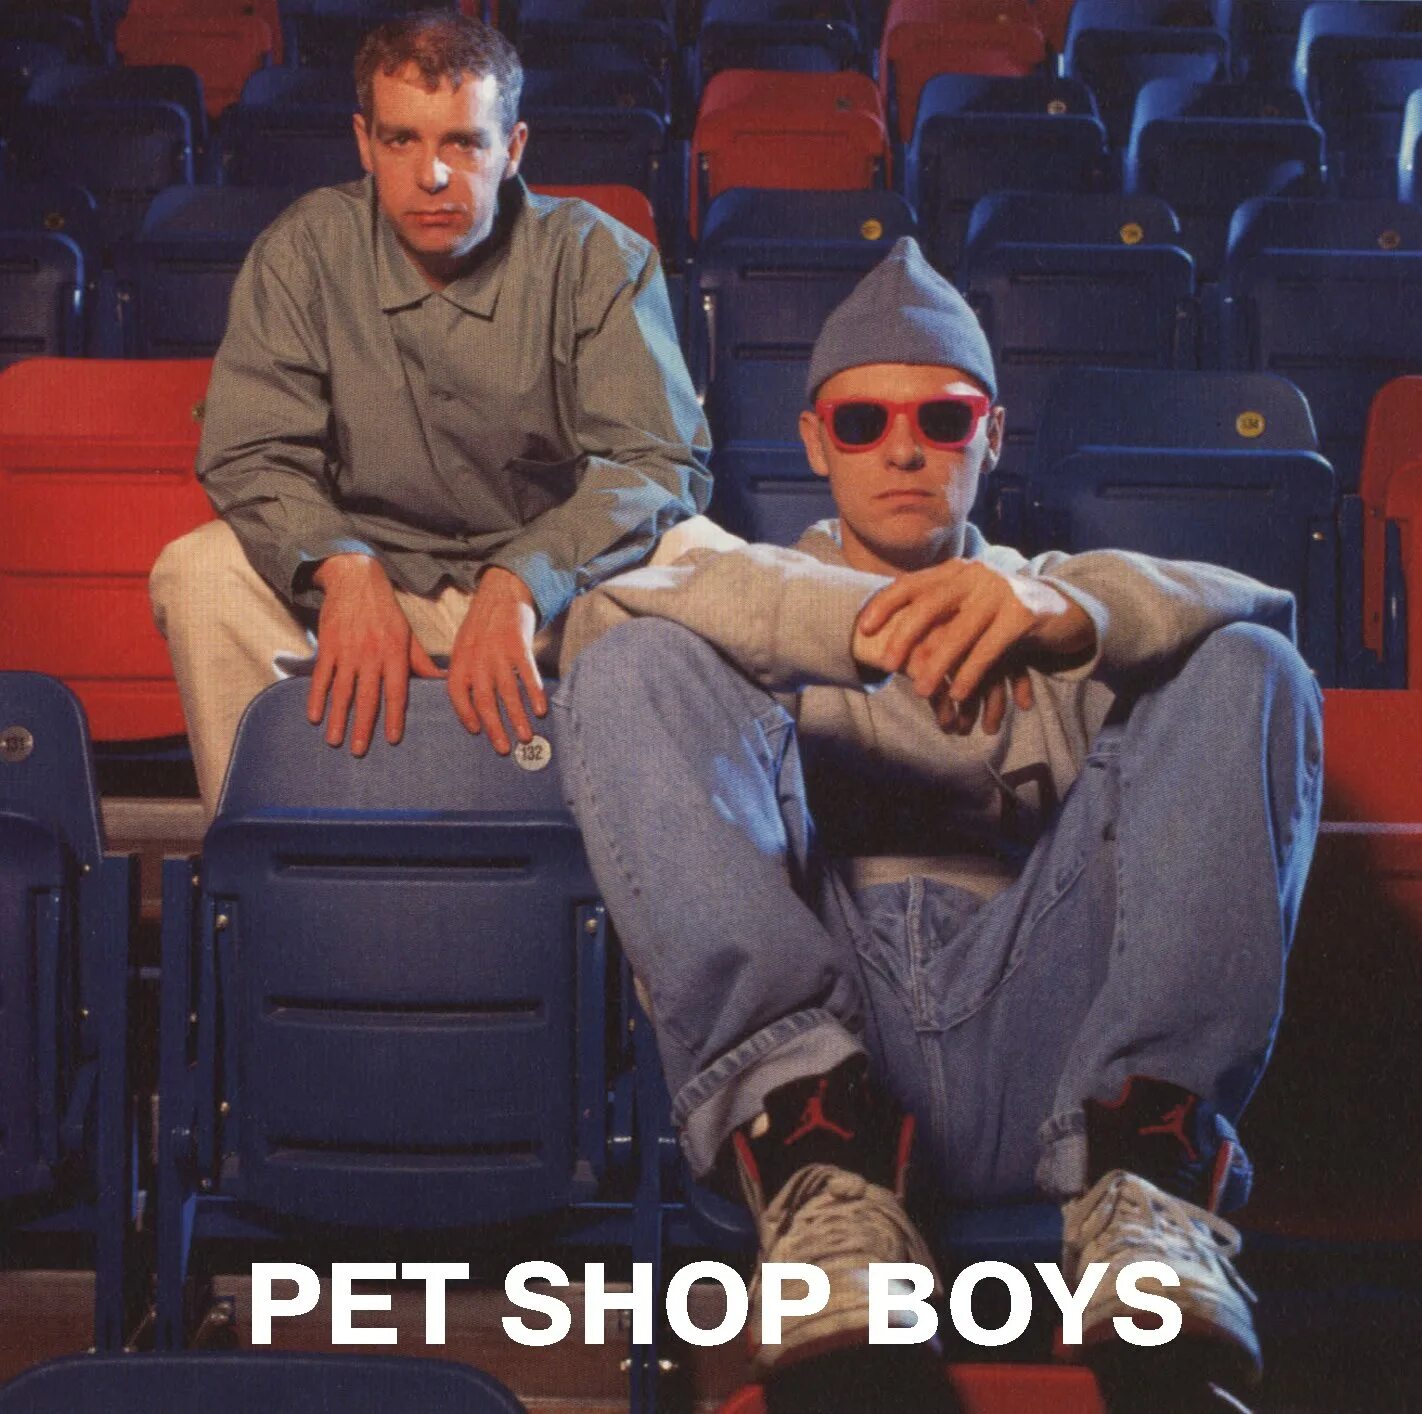 Pet shop boys. Pet shop boys фото. Pet shop boys Single. Pet shop boys хиты. Пет шоп бойс хиты слушать